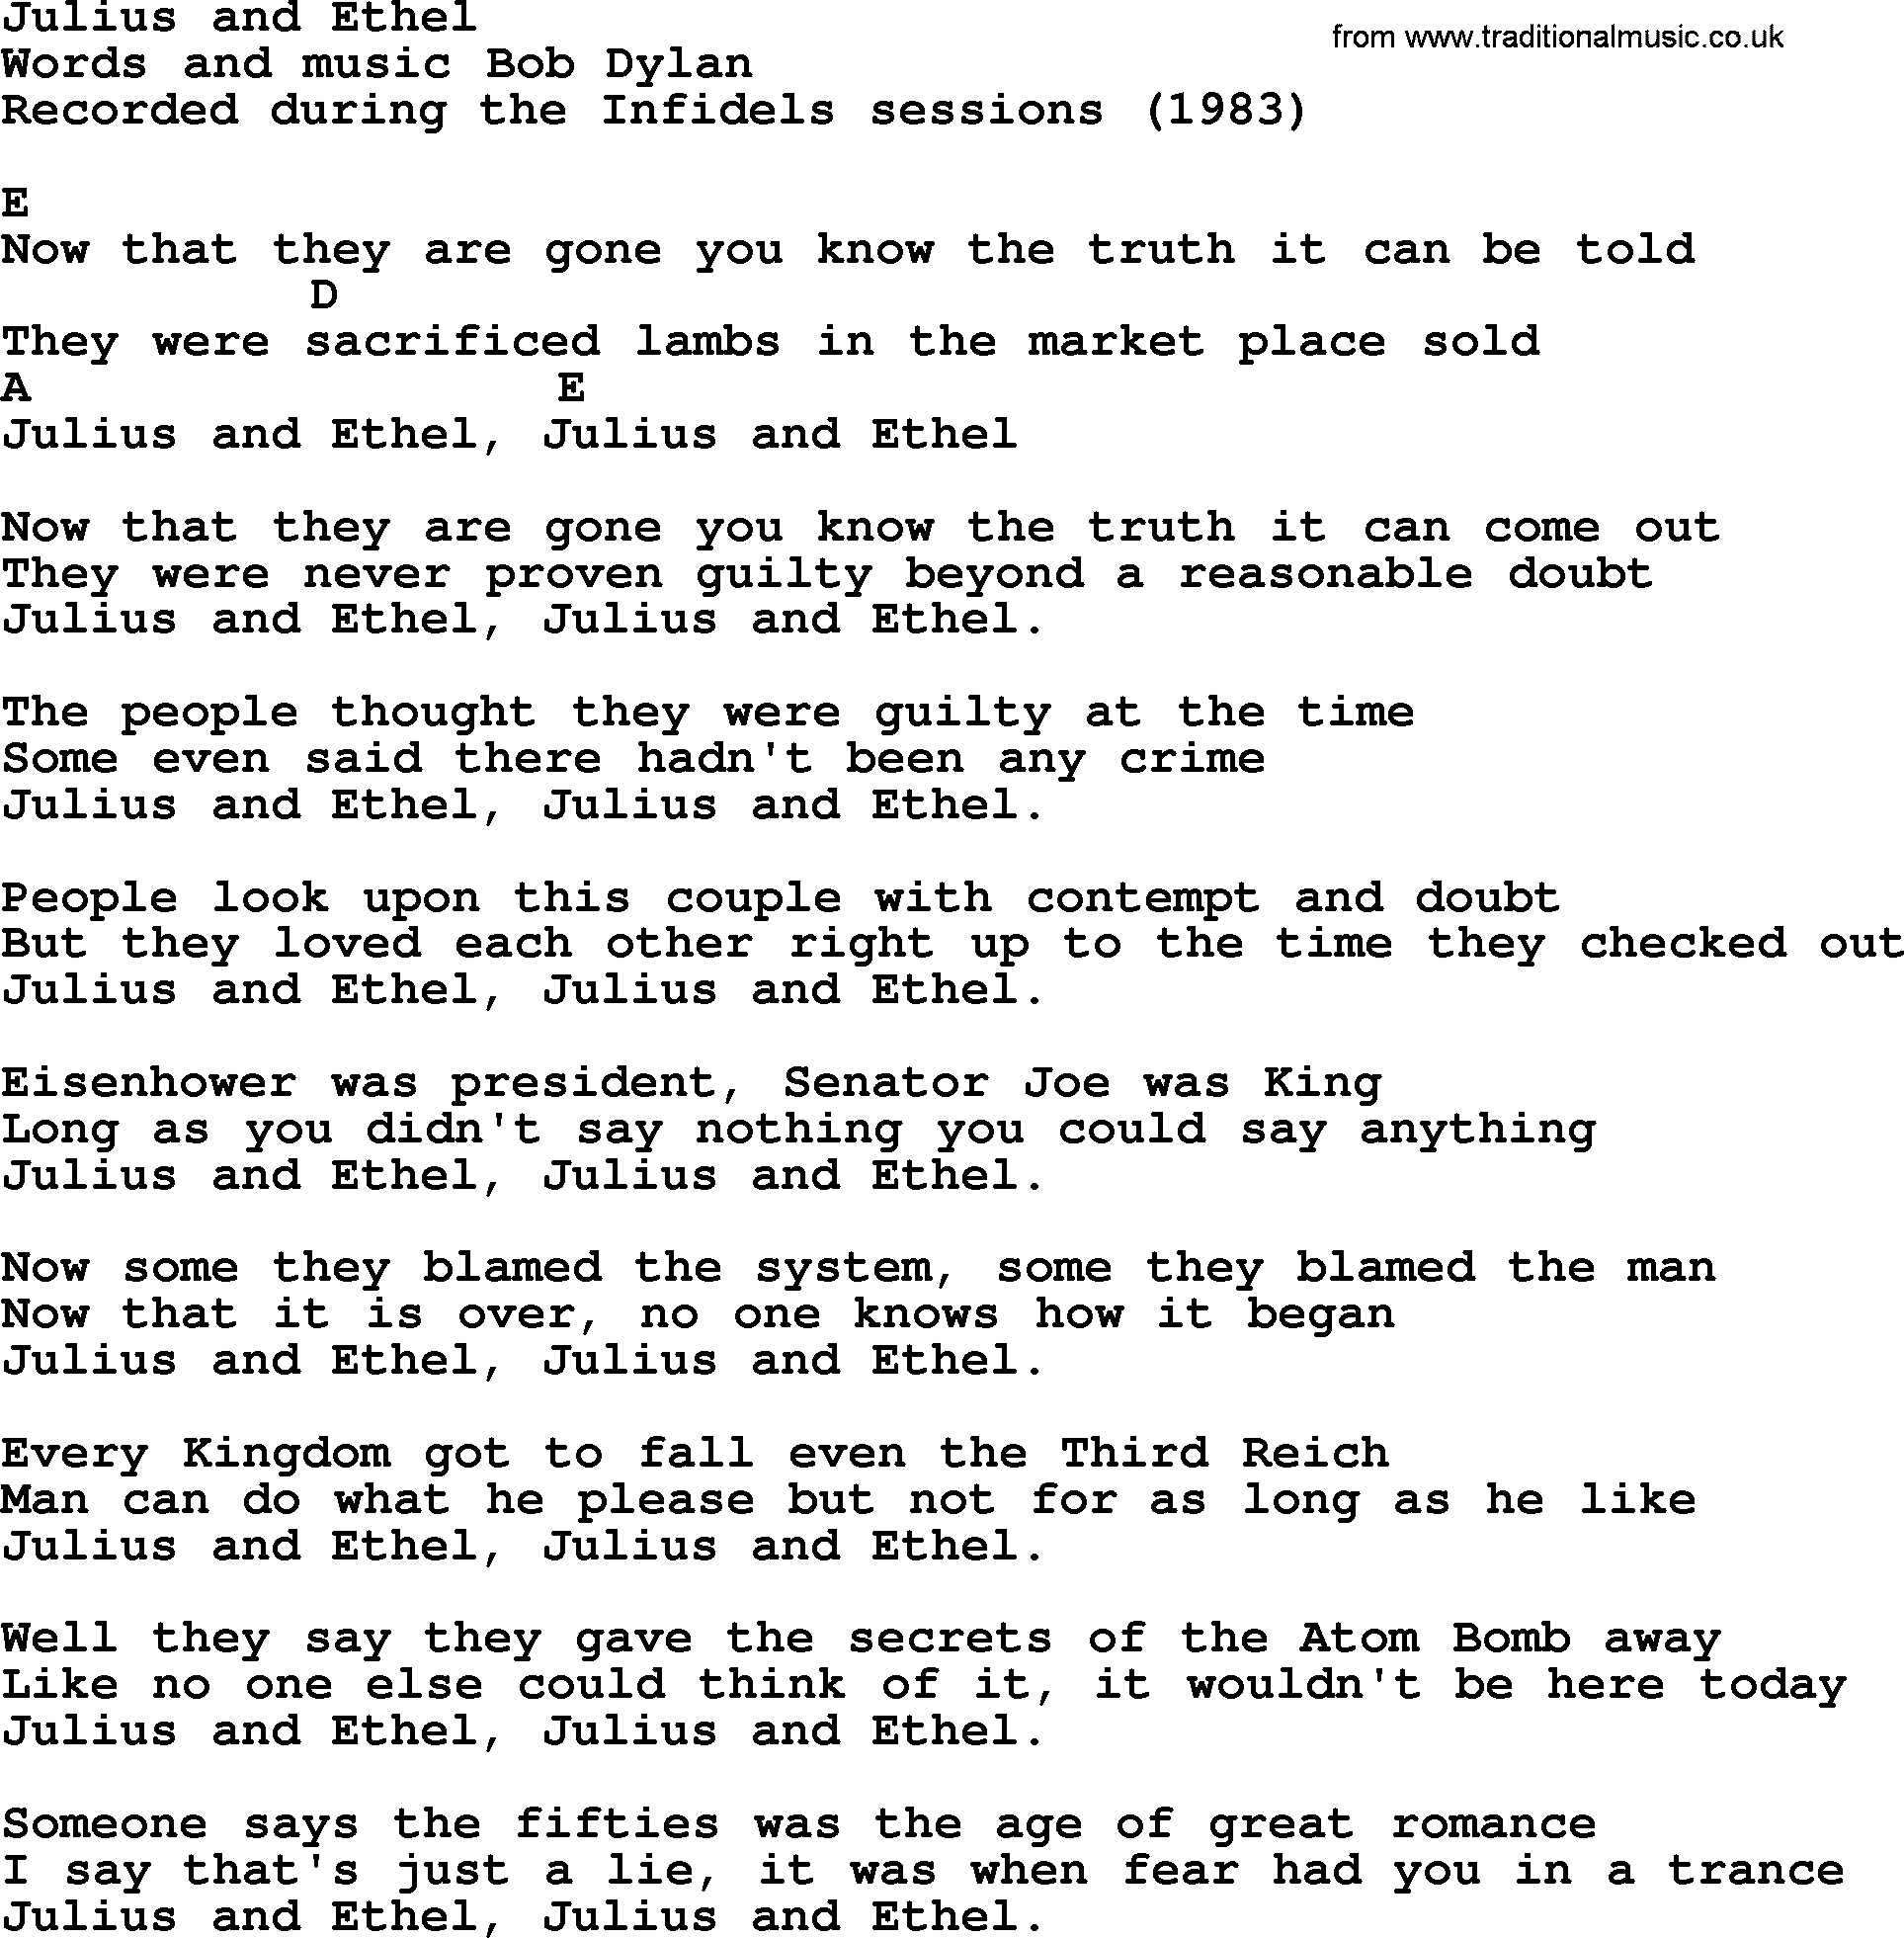 Bob Dylan song, lyrics with chords - Julius and Ethel